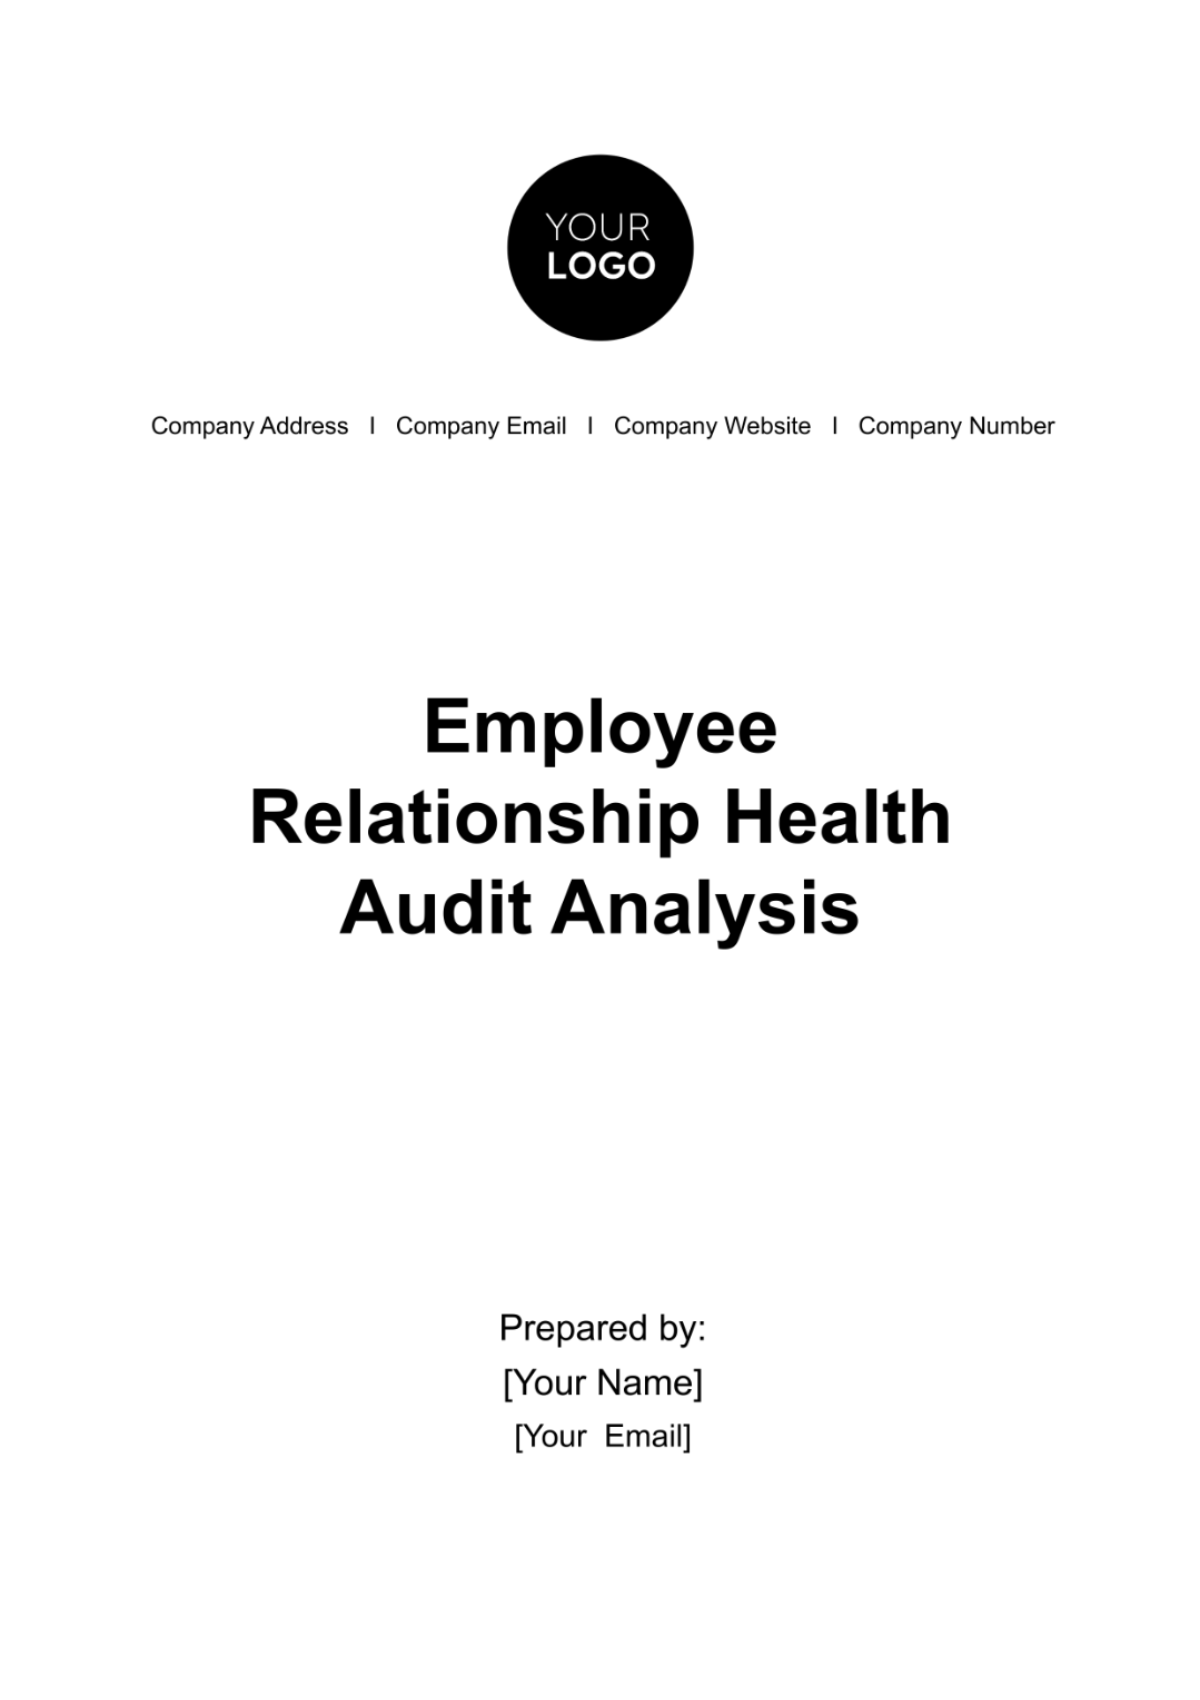 Free Employee Relationship Health Audit Analysis HR Template